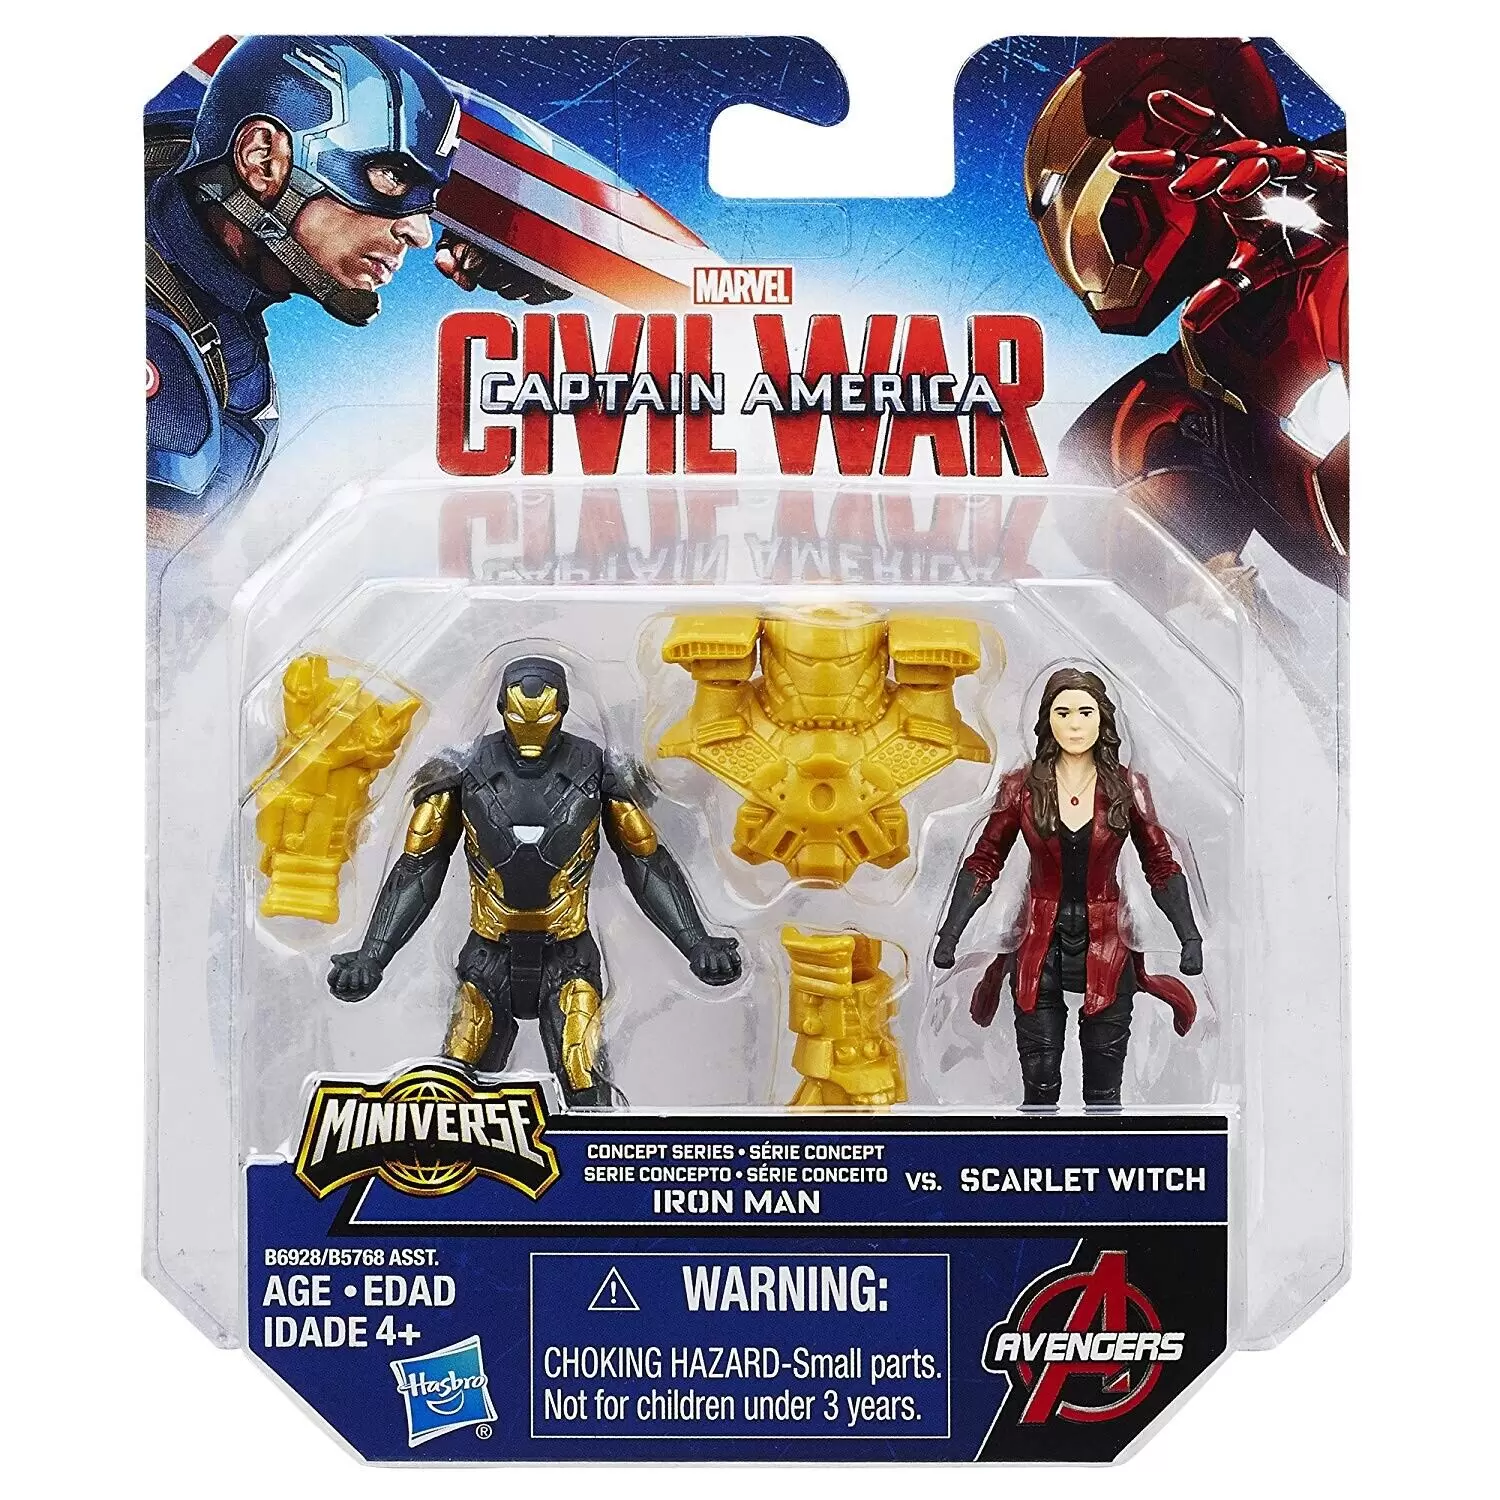 Captain America Civil War - Concept Series - Iron Man vs Scarlet Witch